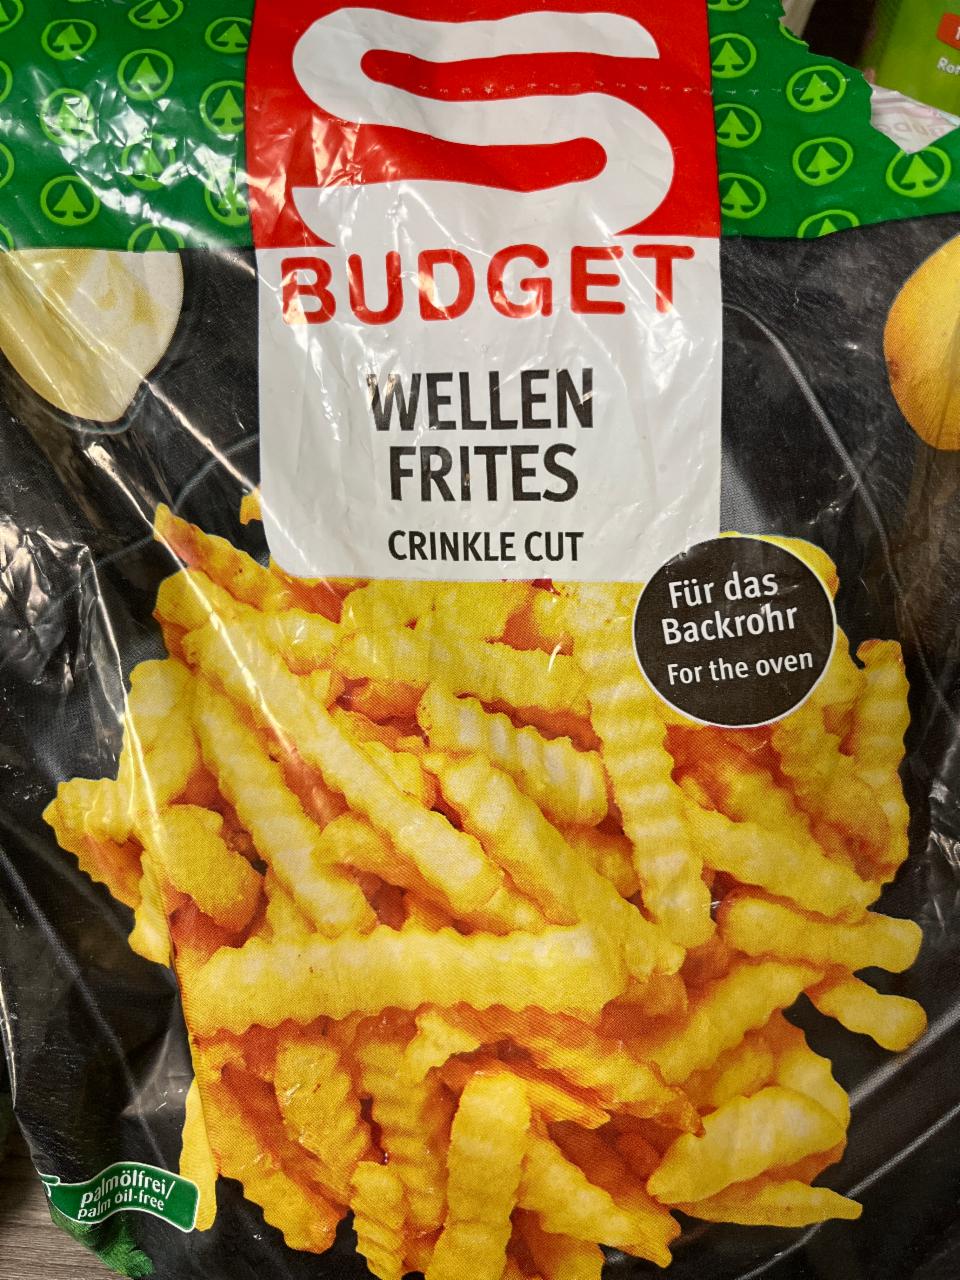 Képek - Wellen frites crinkle cut S Budget